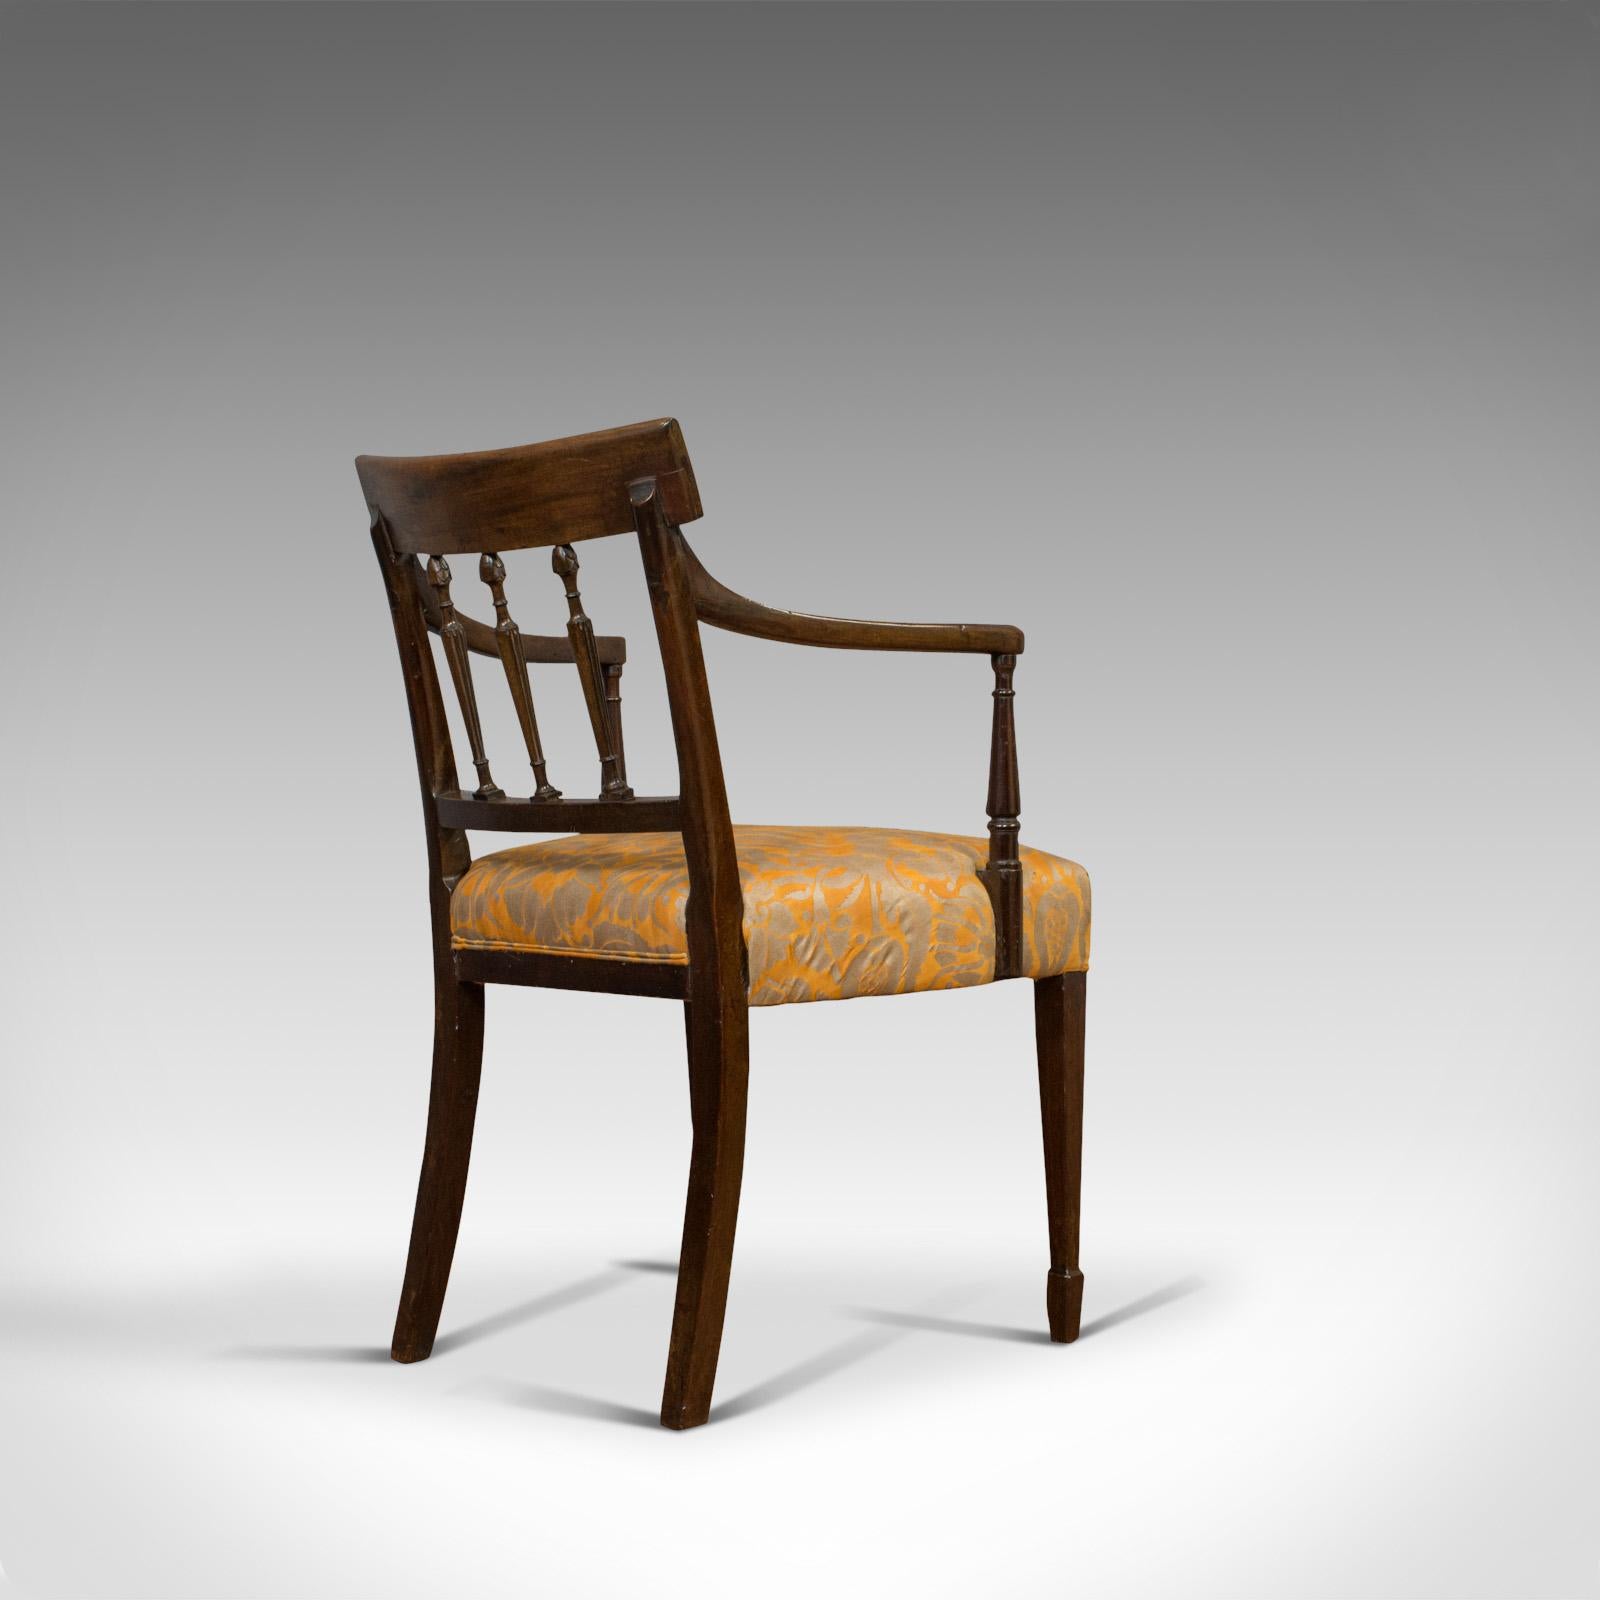 19th Century Antique Elbow Chair, English, Mahogany, Armchair, Sheraton Overtones, Regency